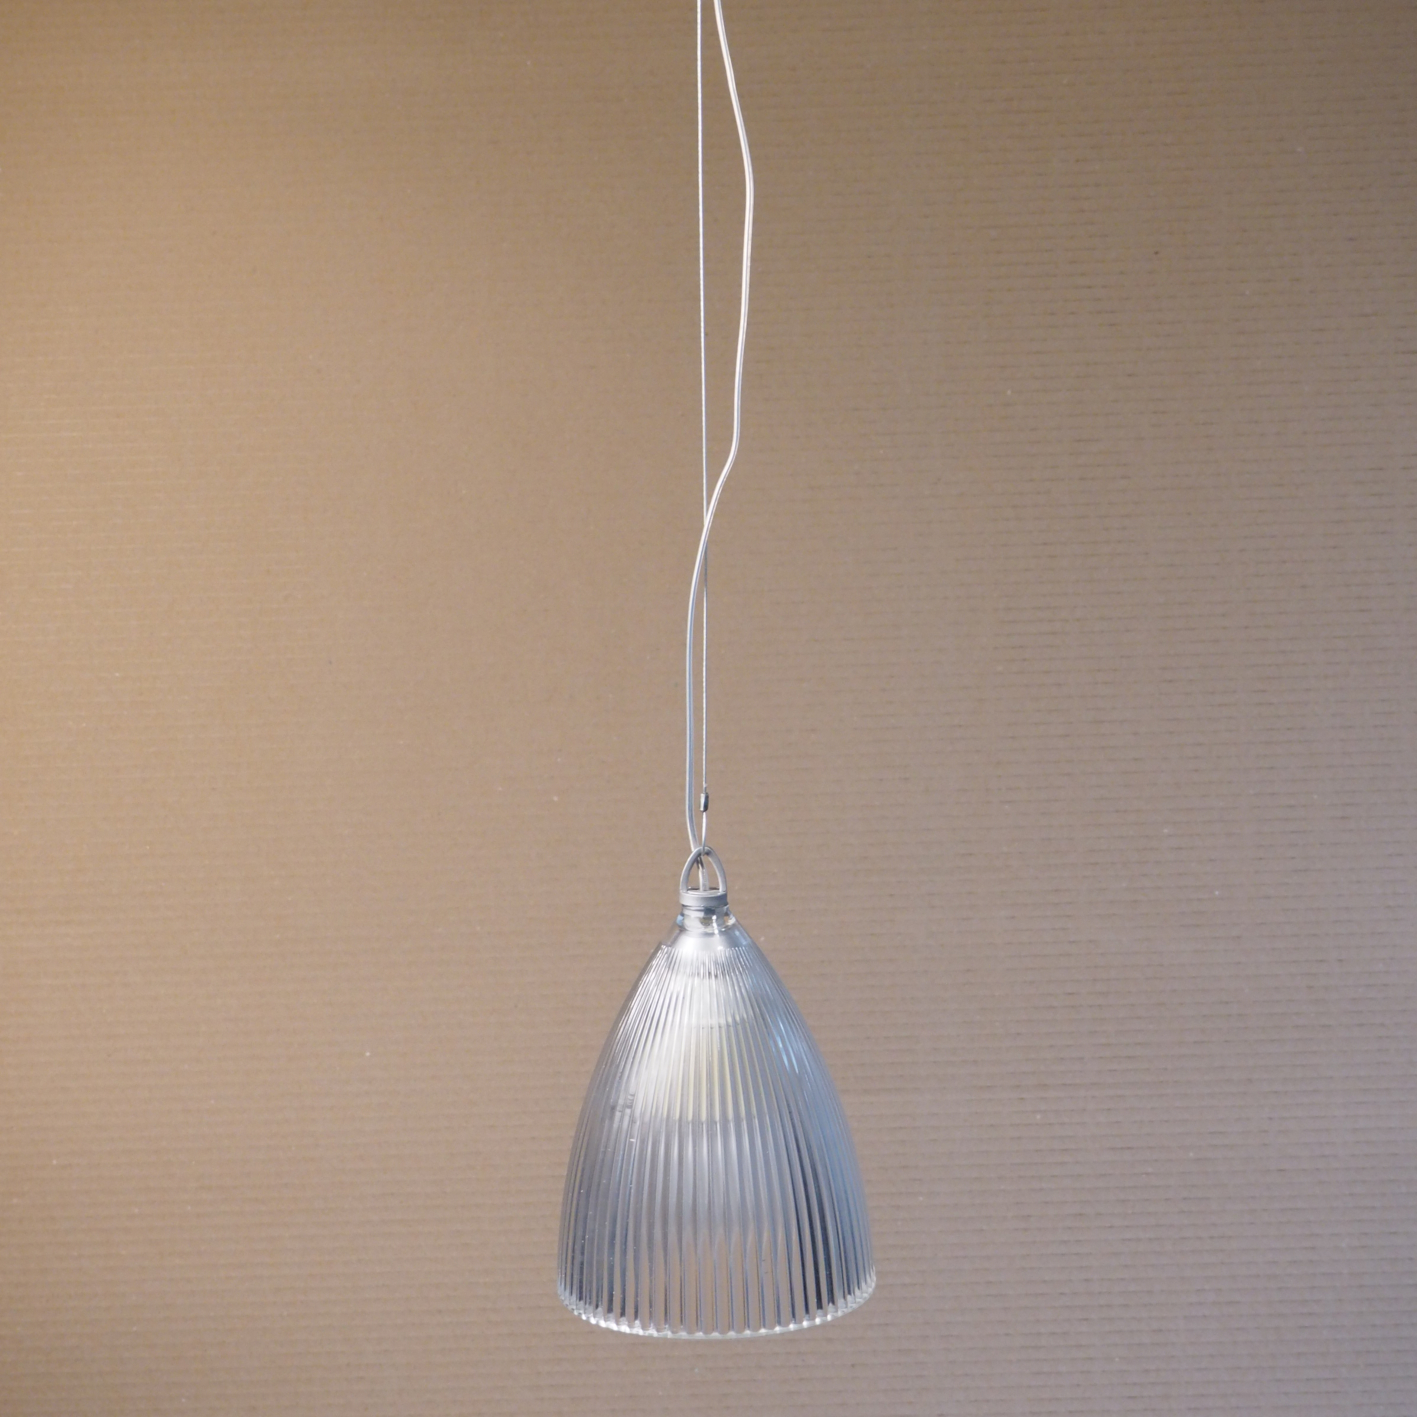 Hanging light 'Stresa' by Shigeaki Asahara for Lucitalia (ca. 1990)